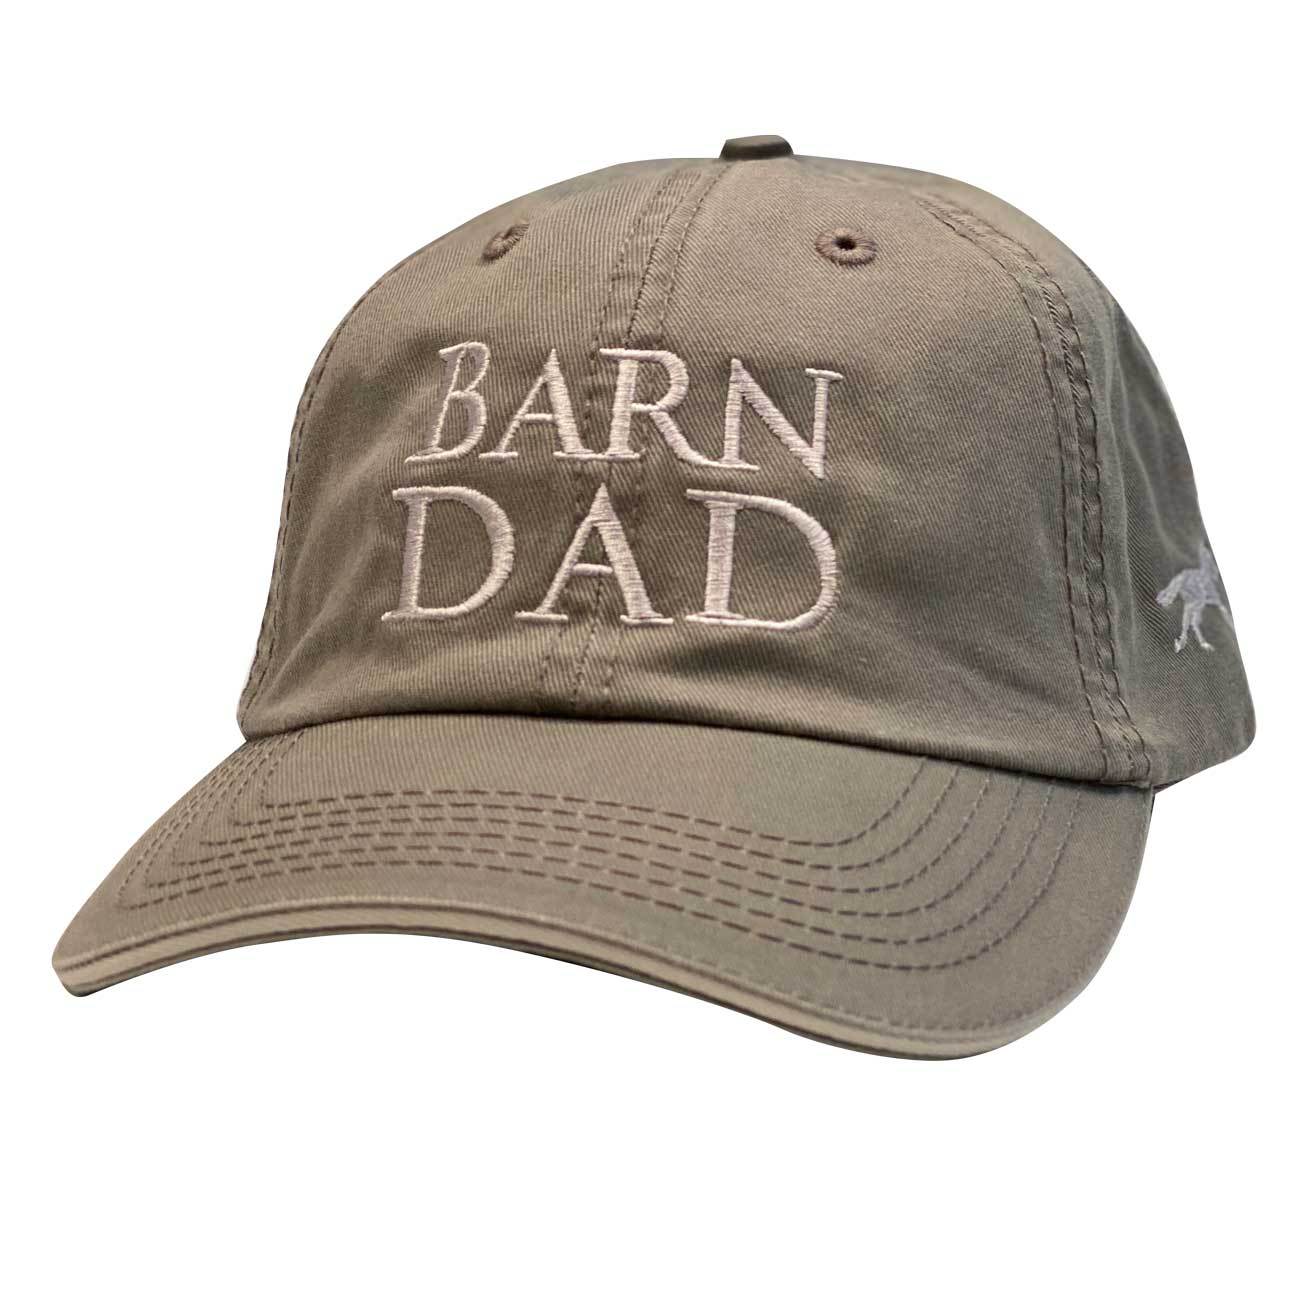 Barn Dad Hat